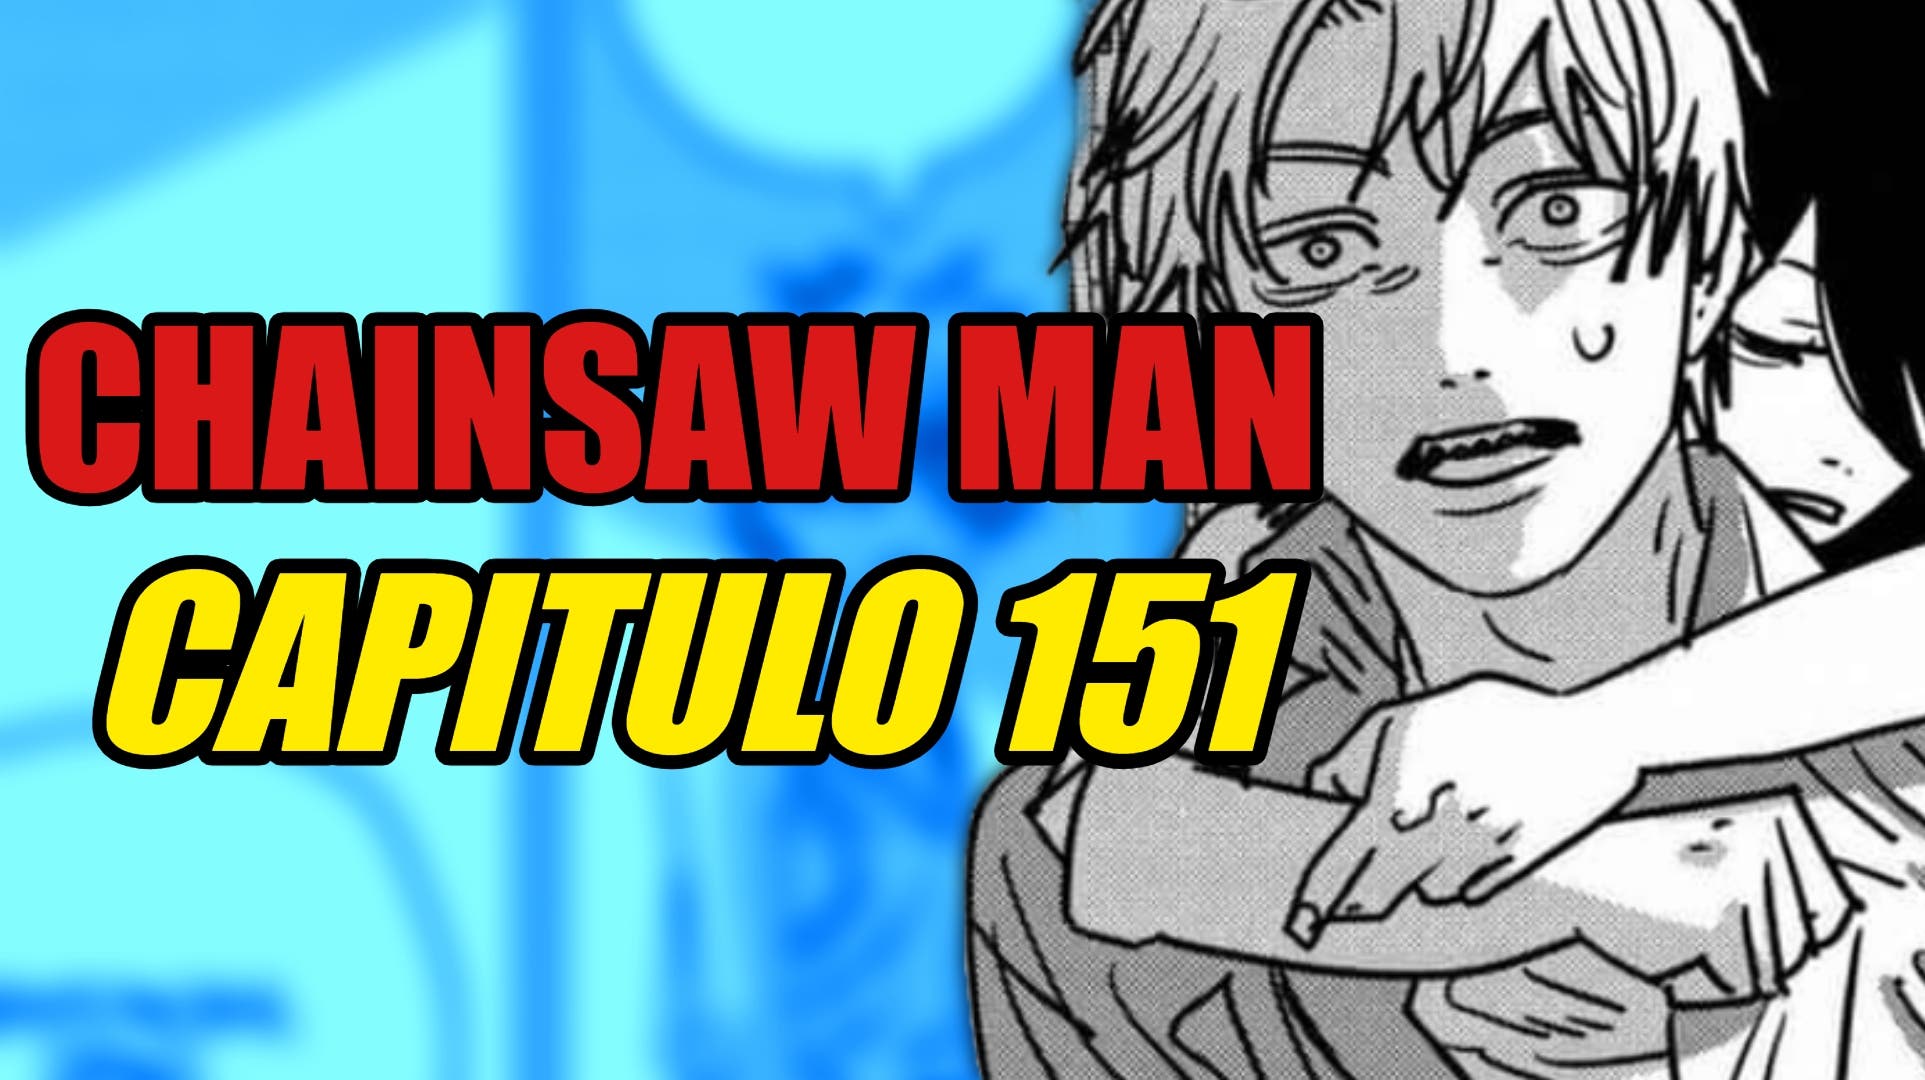 Chainsaw Man capítulo 151: data e hora de lançamento - Multiverso Anime